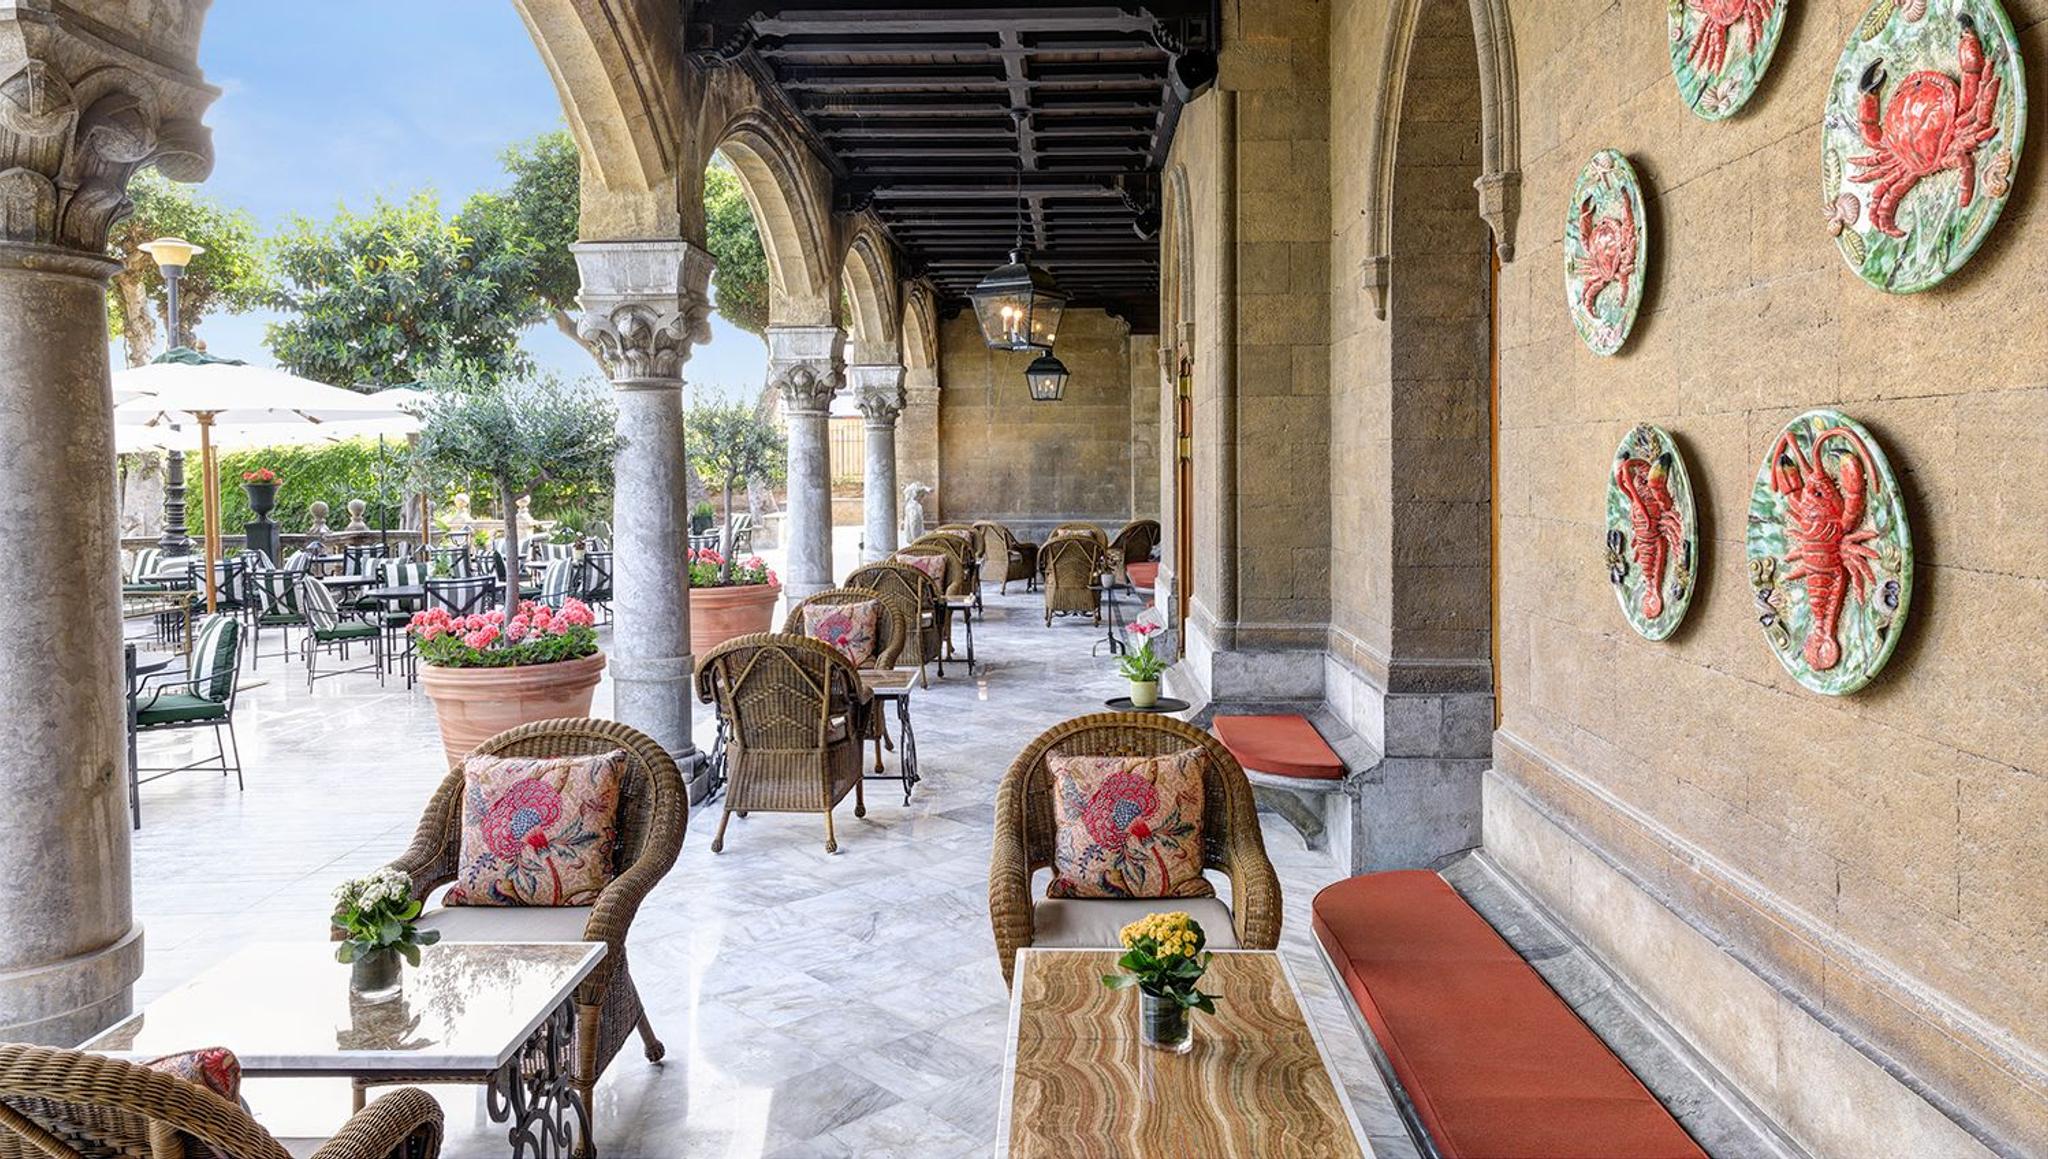 Sizilianische Grandeur in der Villa Igiea